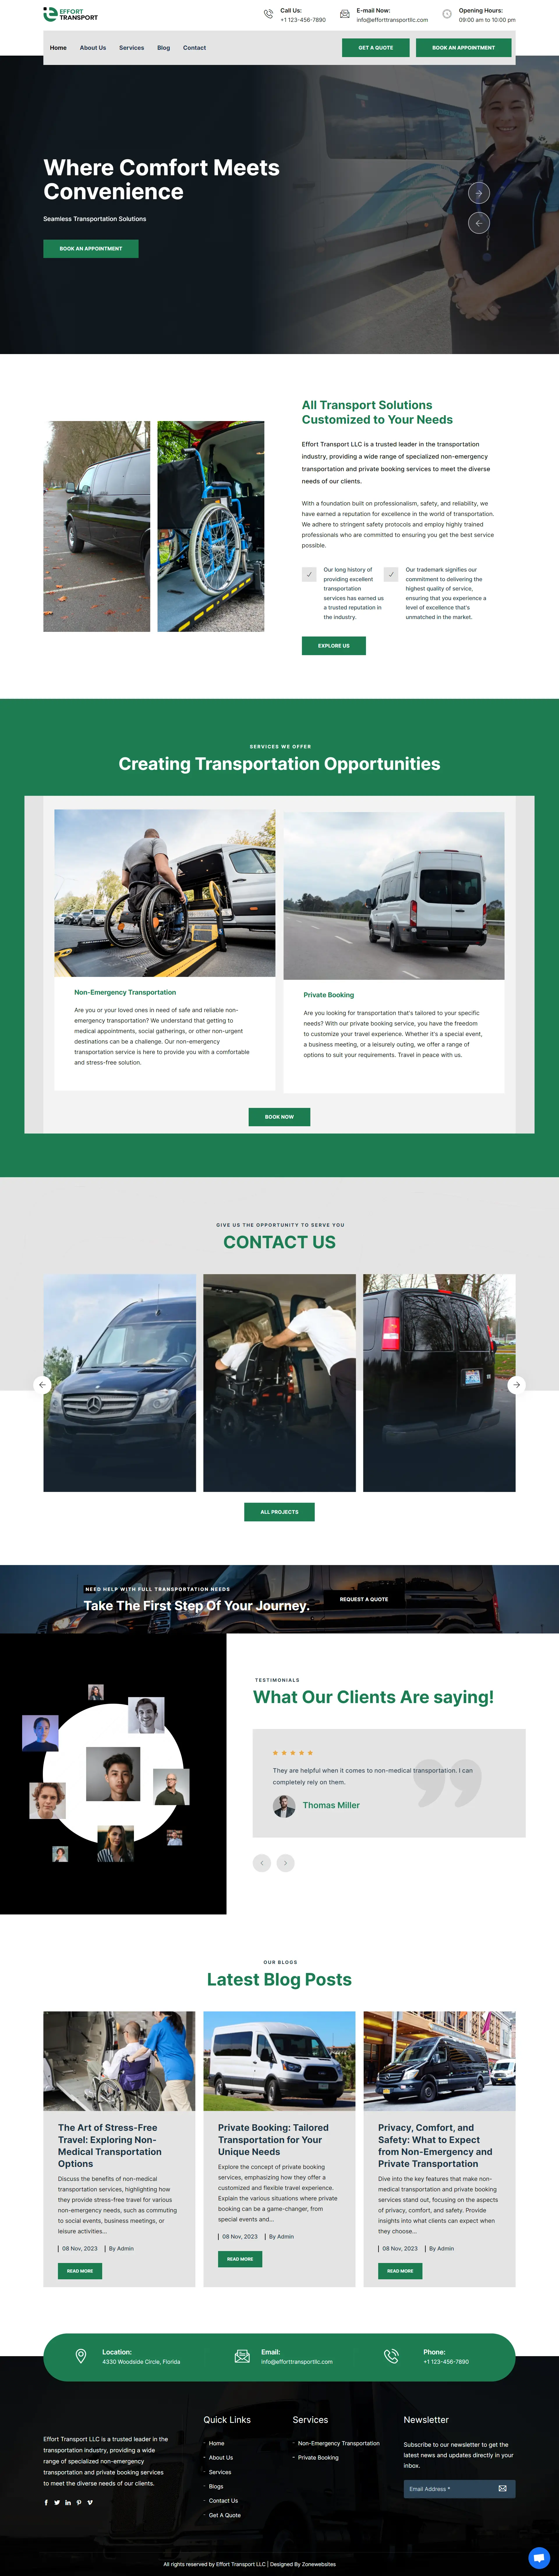 Transportation & Private Booking Services Website Design